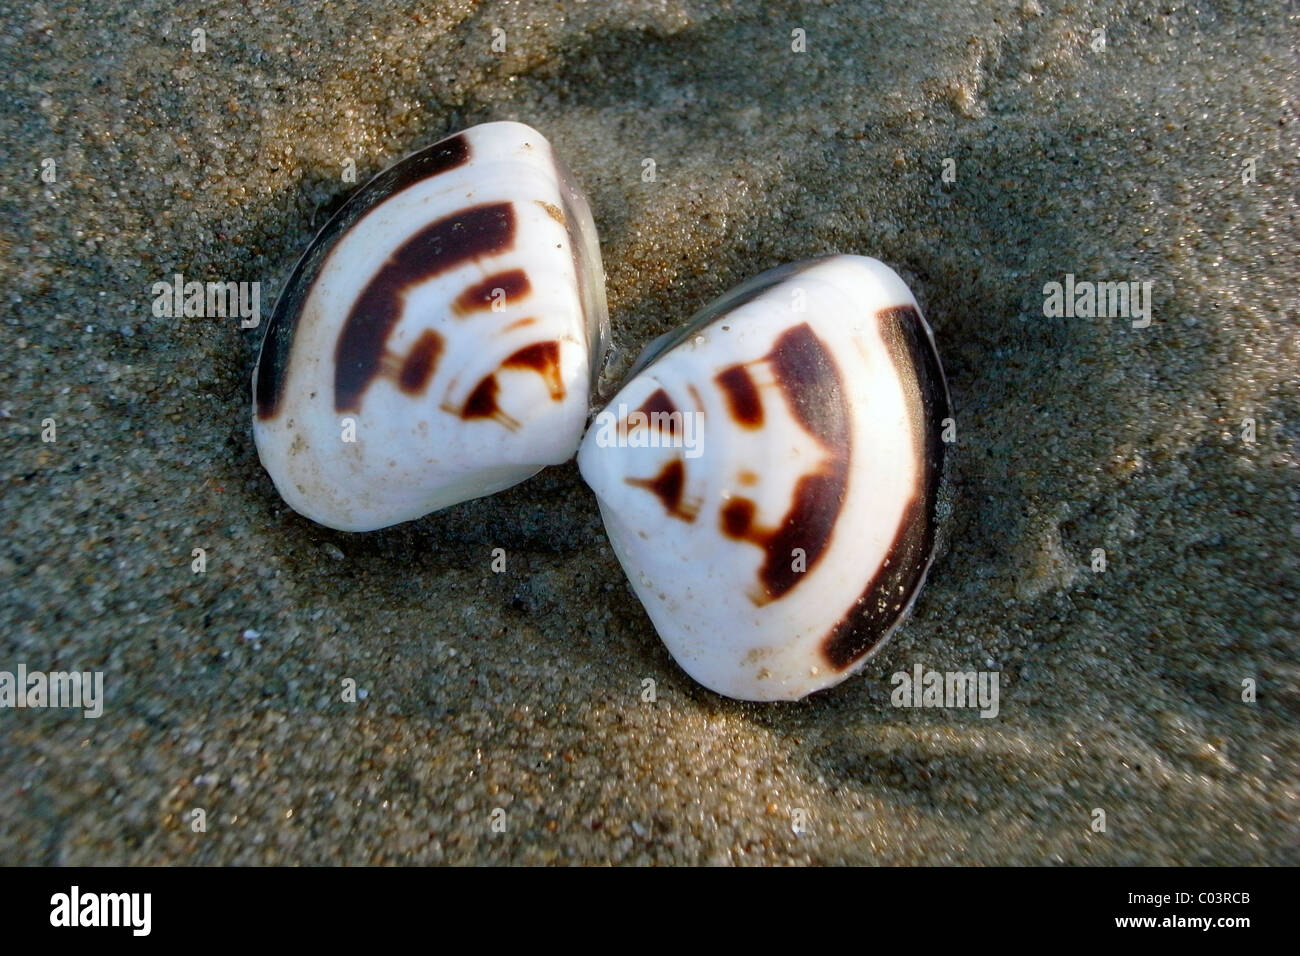 Clamshells on a sandy beach, detail Stock Photo